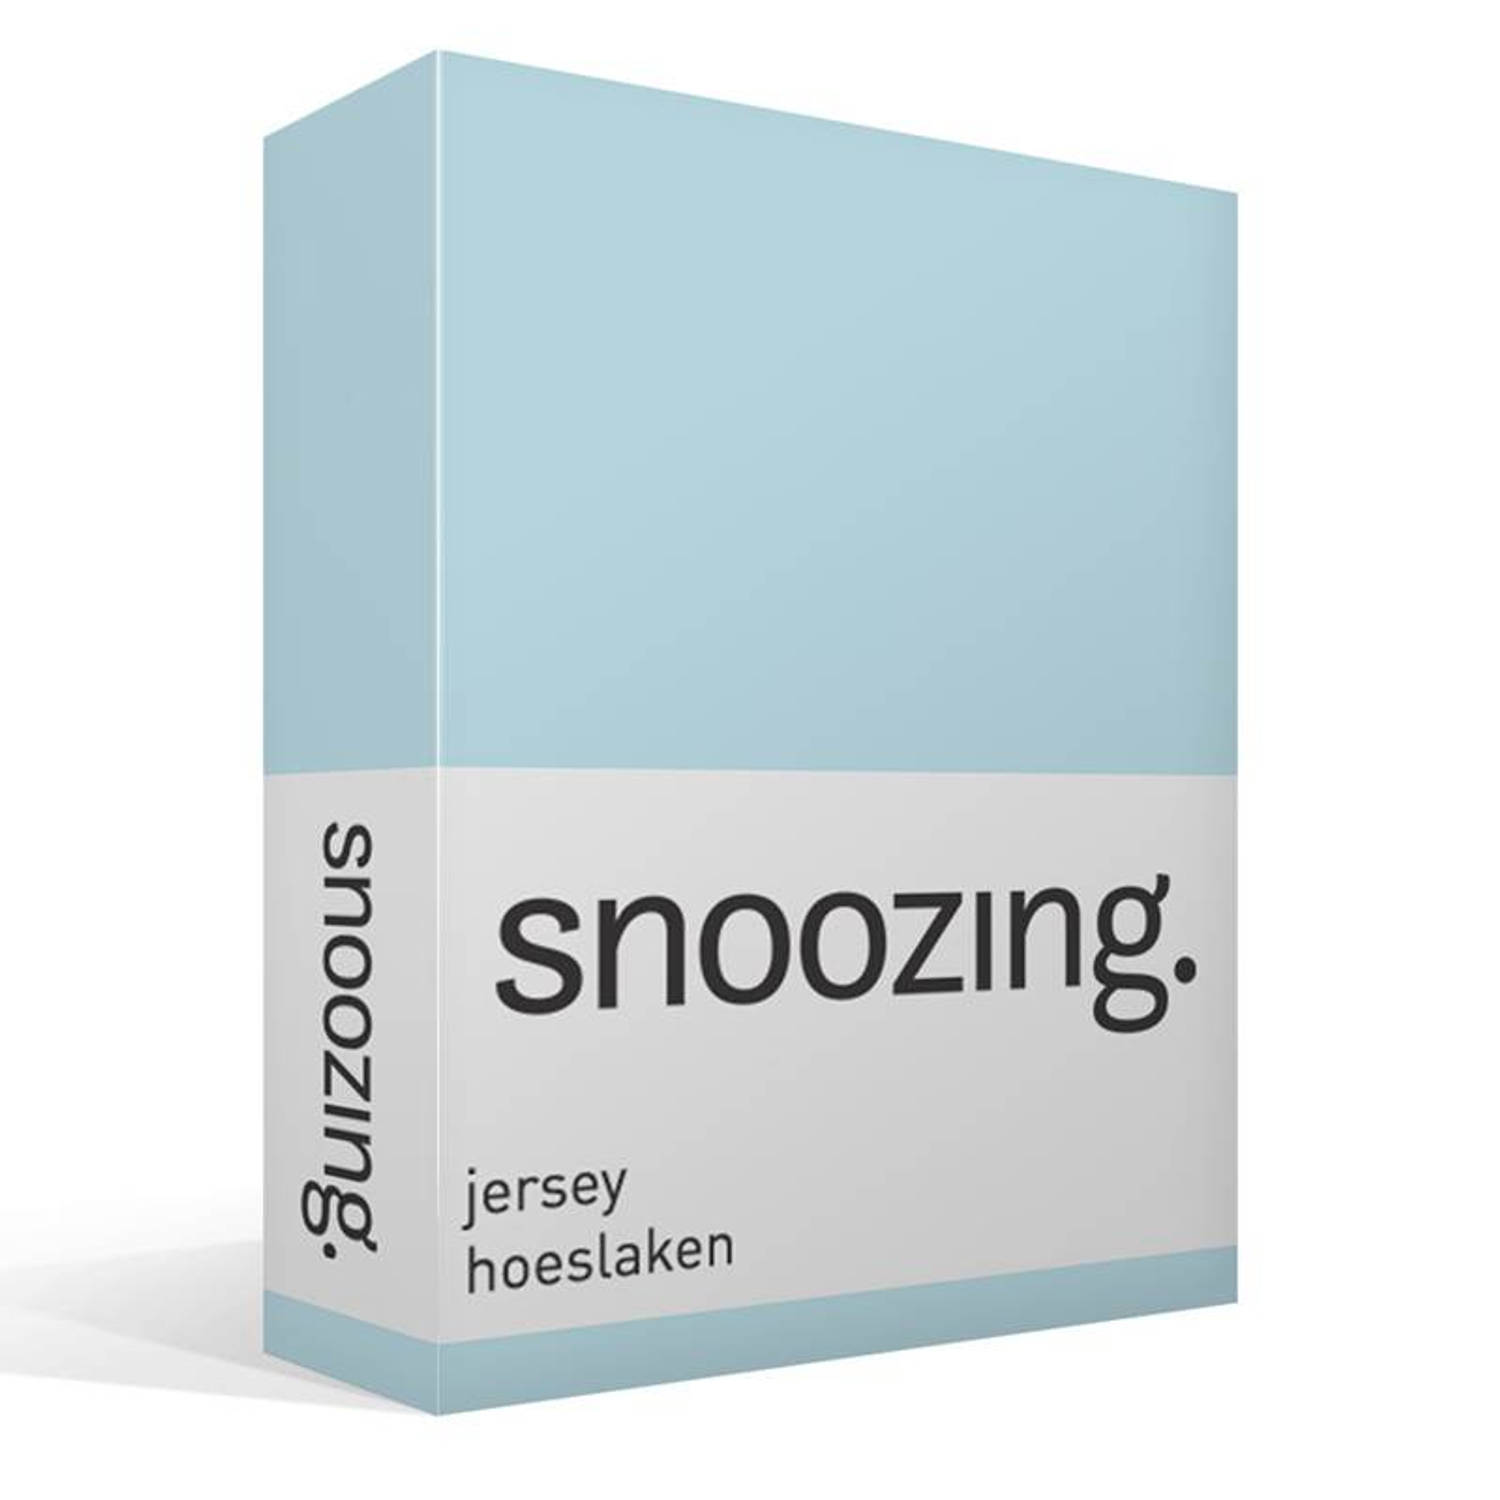 Snoozing jersey hoeslaken - 100% gebreide katoen - Lits-jumeaux (180x210/220 cm) - Blauw, Hemel